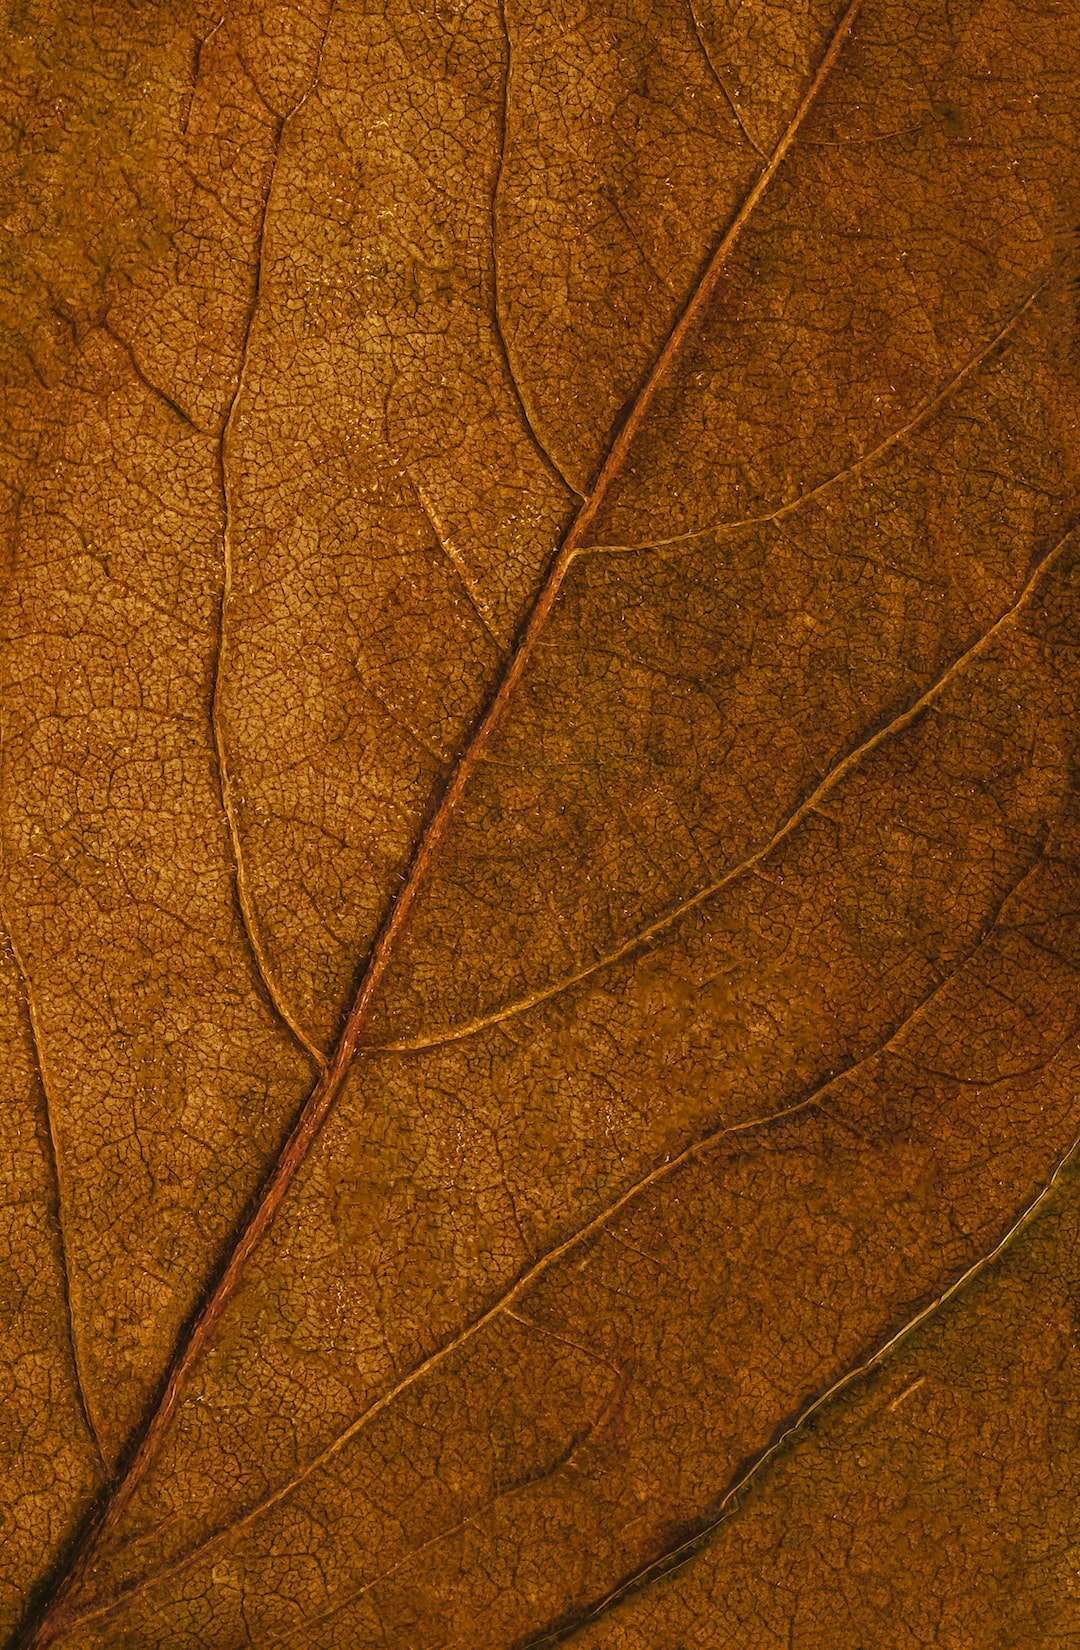 Texture of Autumn leaf